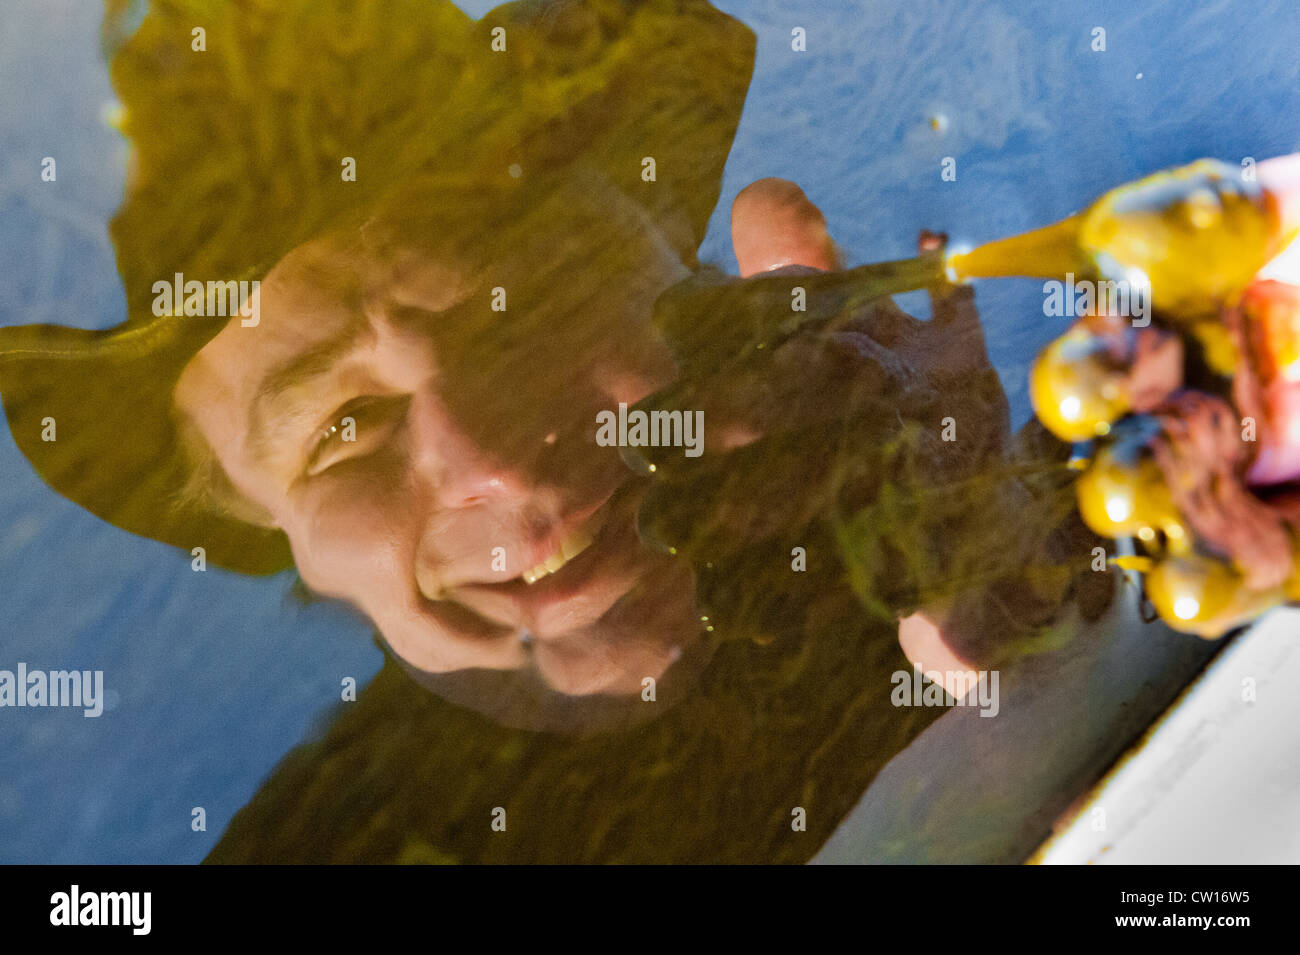 Scientist gives algae demonstration Stock Photo